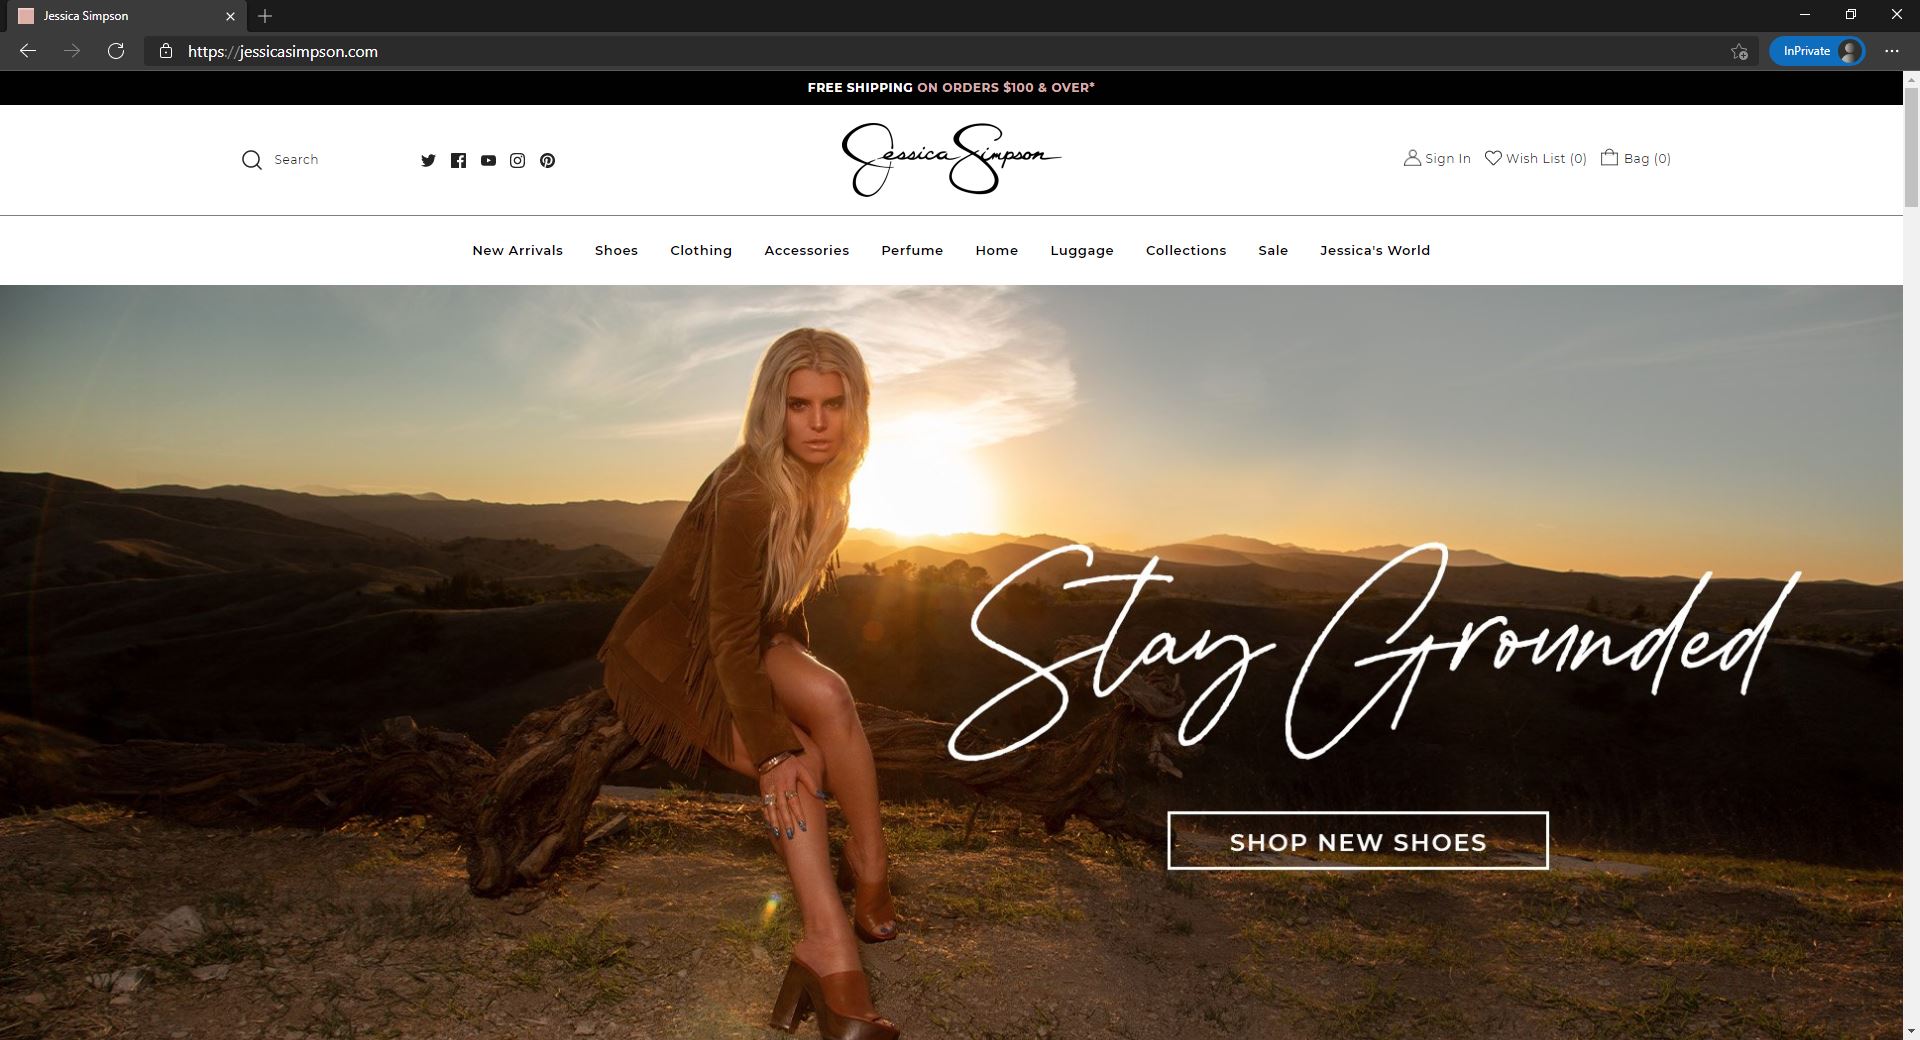 Jessica Simpson ecommerce store homepage